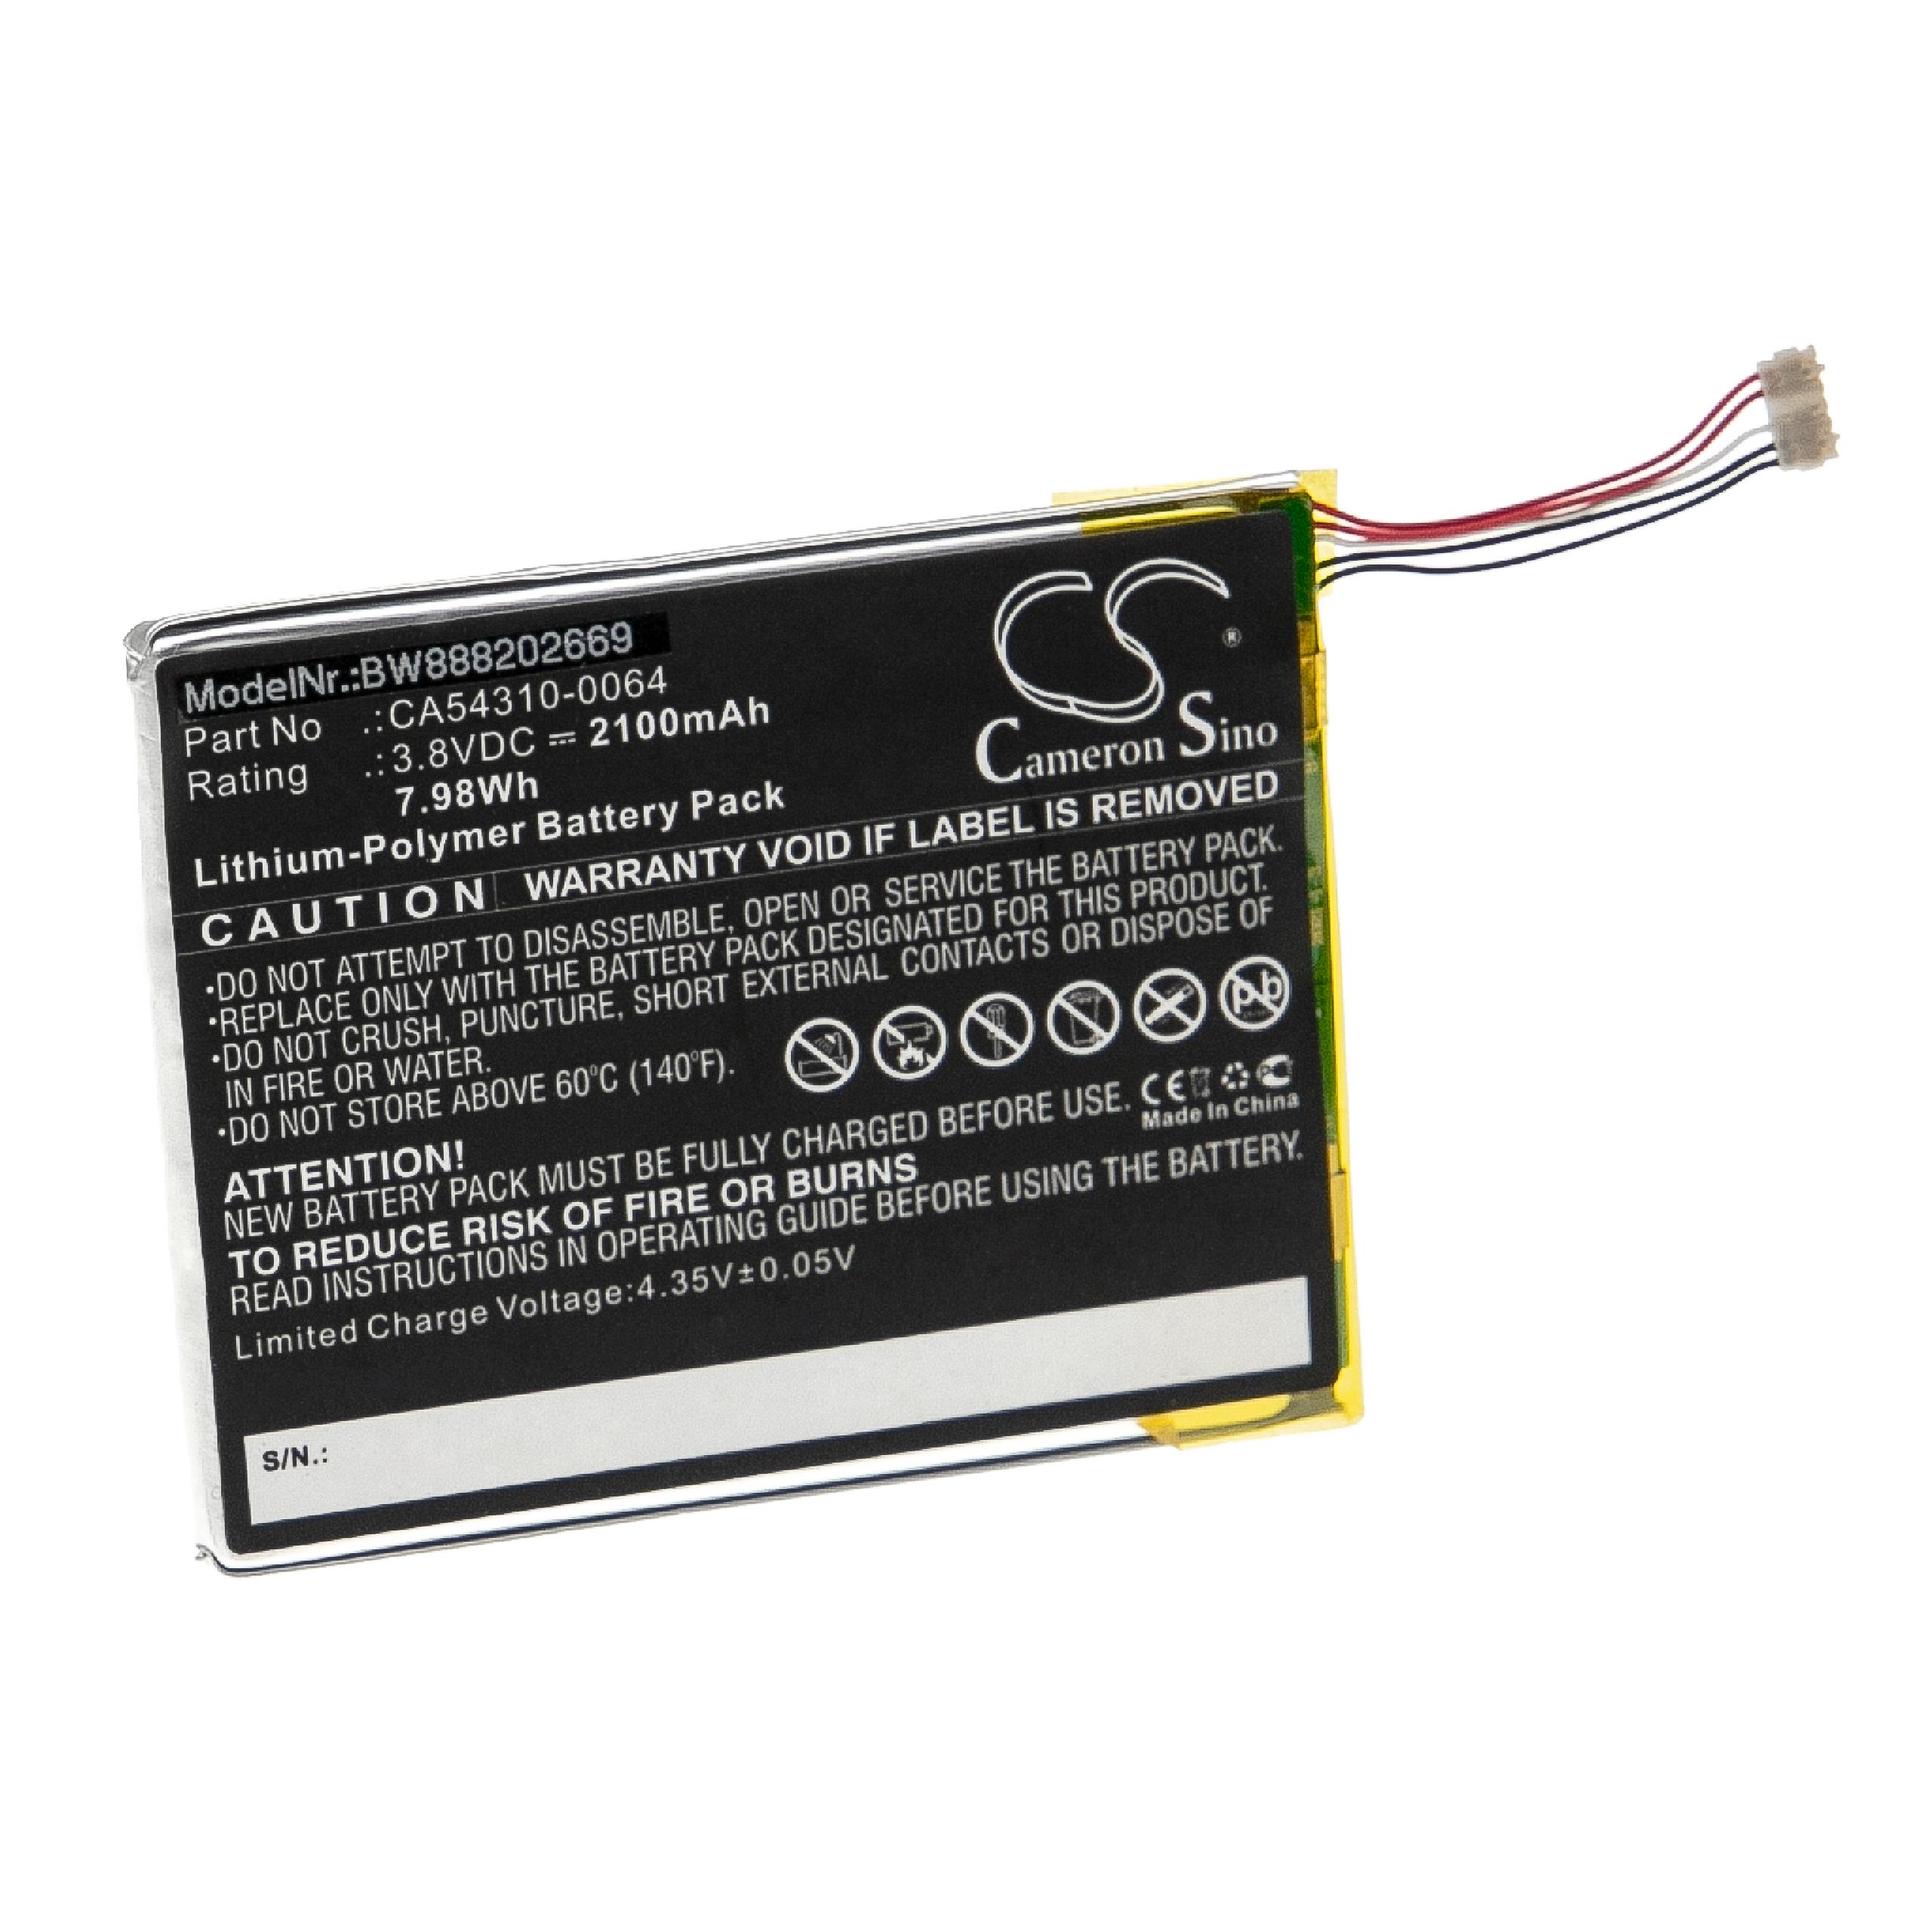 Mobile Phone Battery Replacement for Fujitsu CA54310-0064 - 2100mAh 3.8V Li-polymer